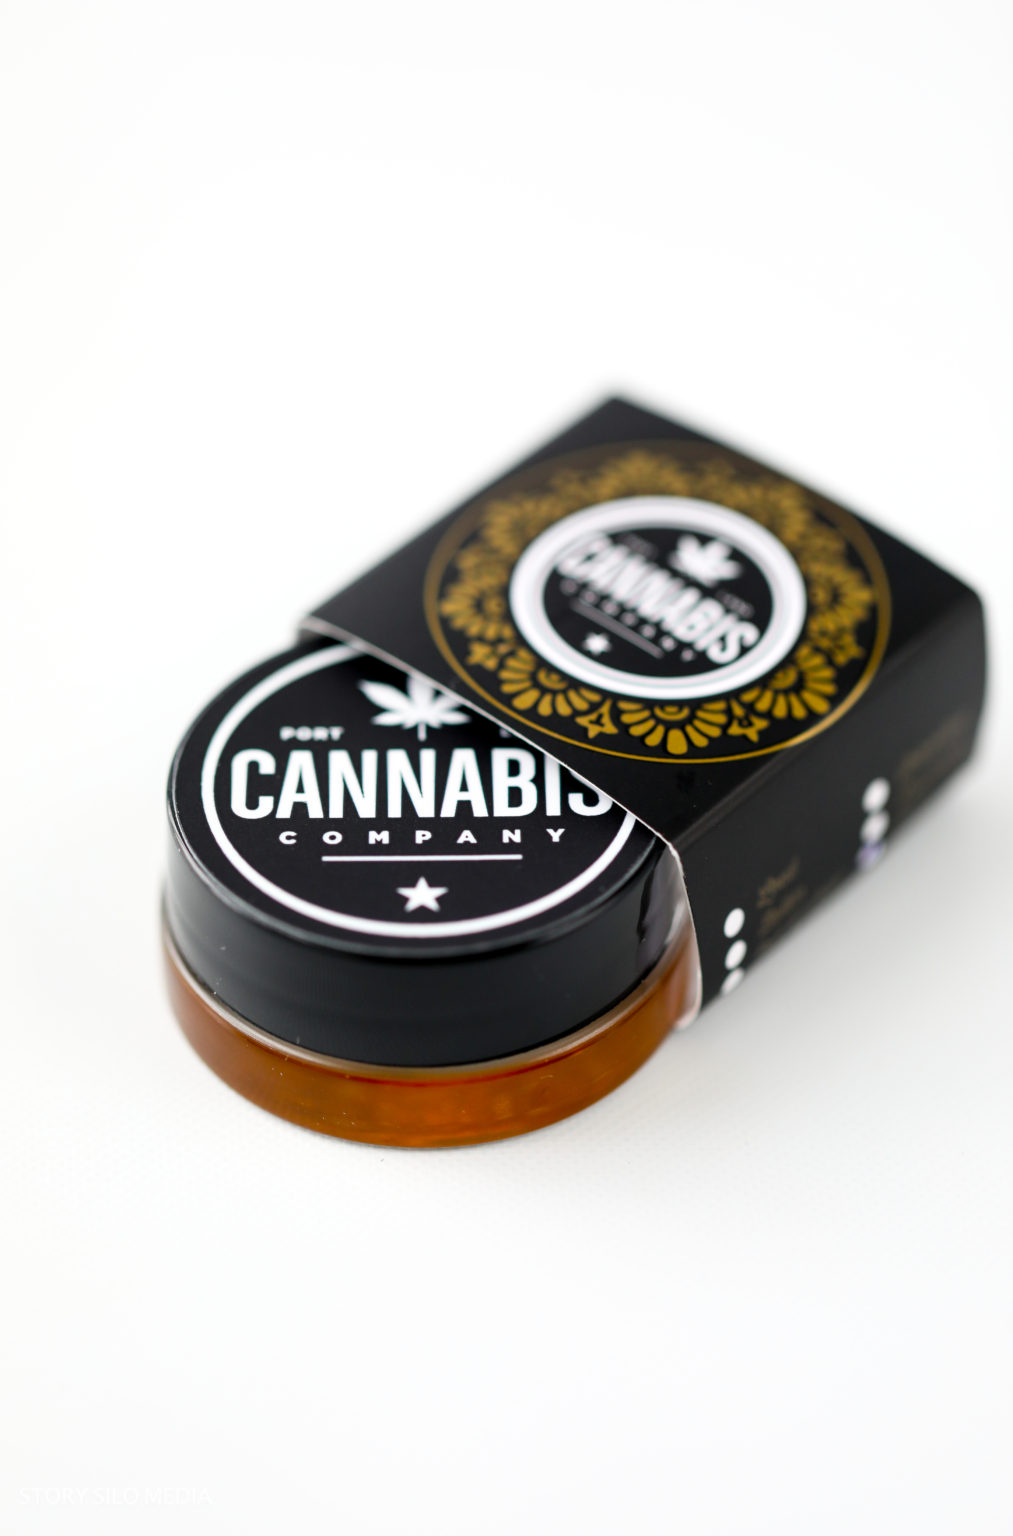 Image of Portland Cannabis Company product